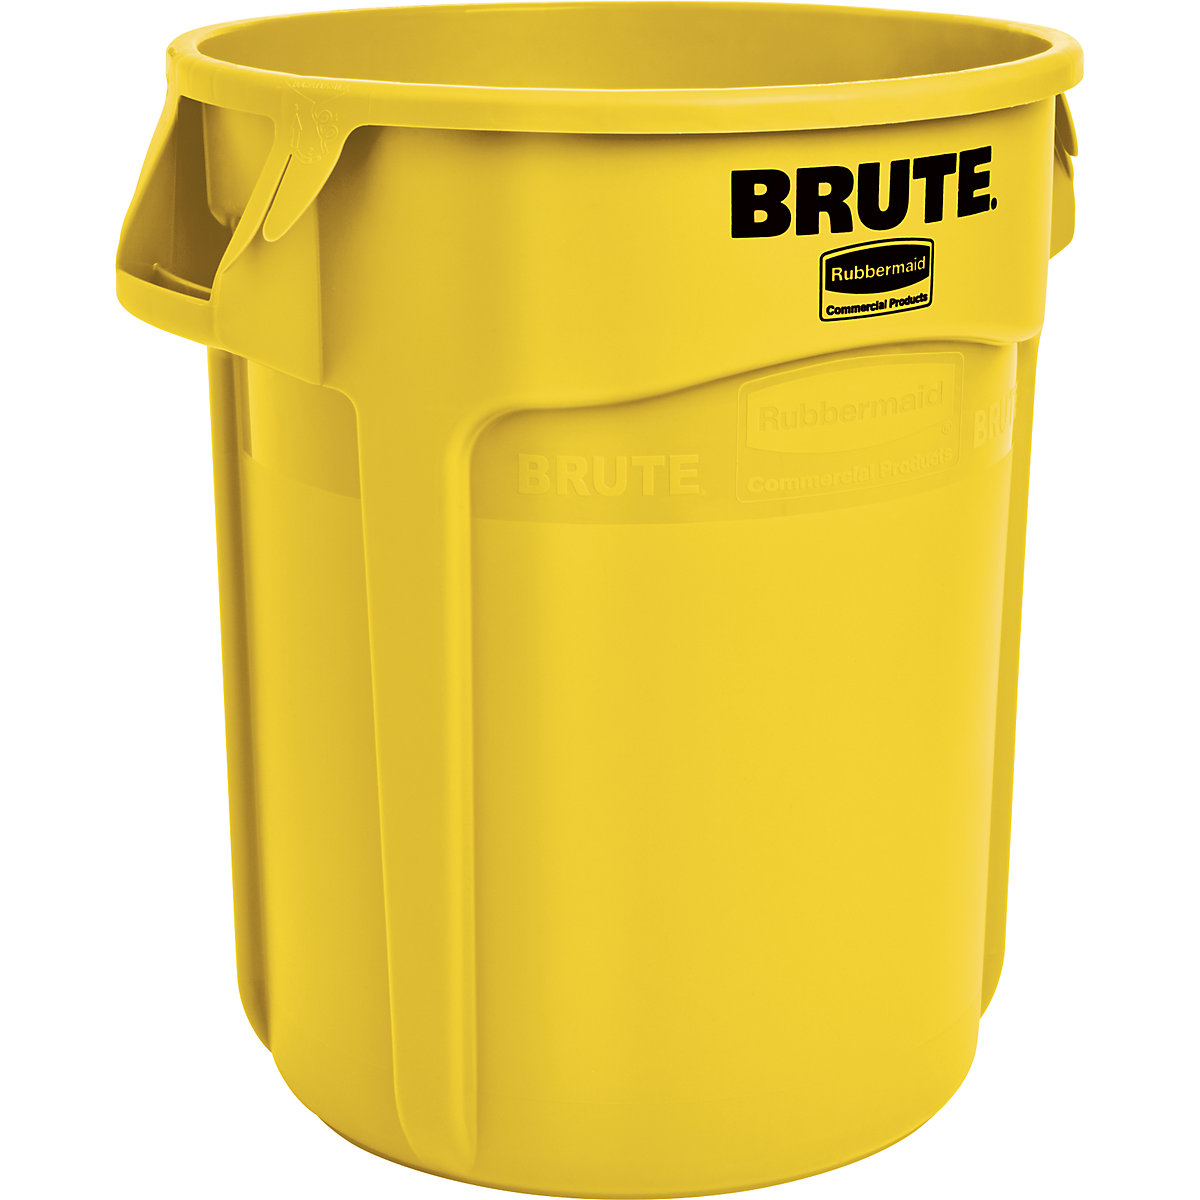 Univerzalni kontejner BRUTE®, okrugli – Rubbermaid, sadržaj 75 l, u žutoj boji